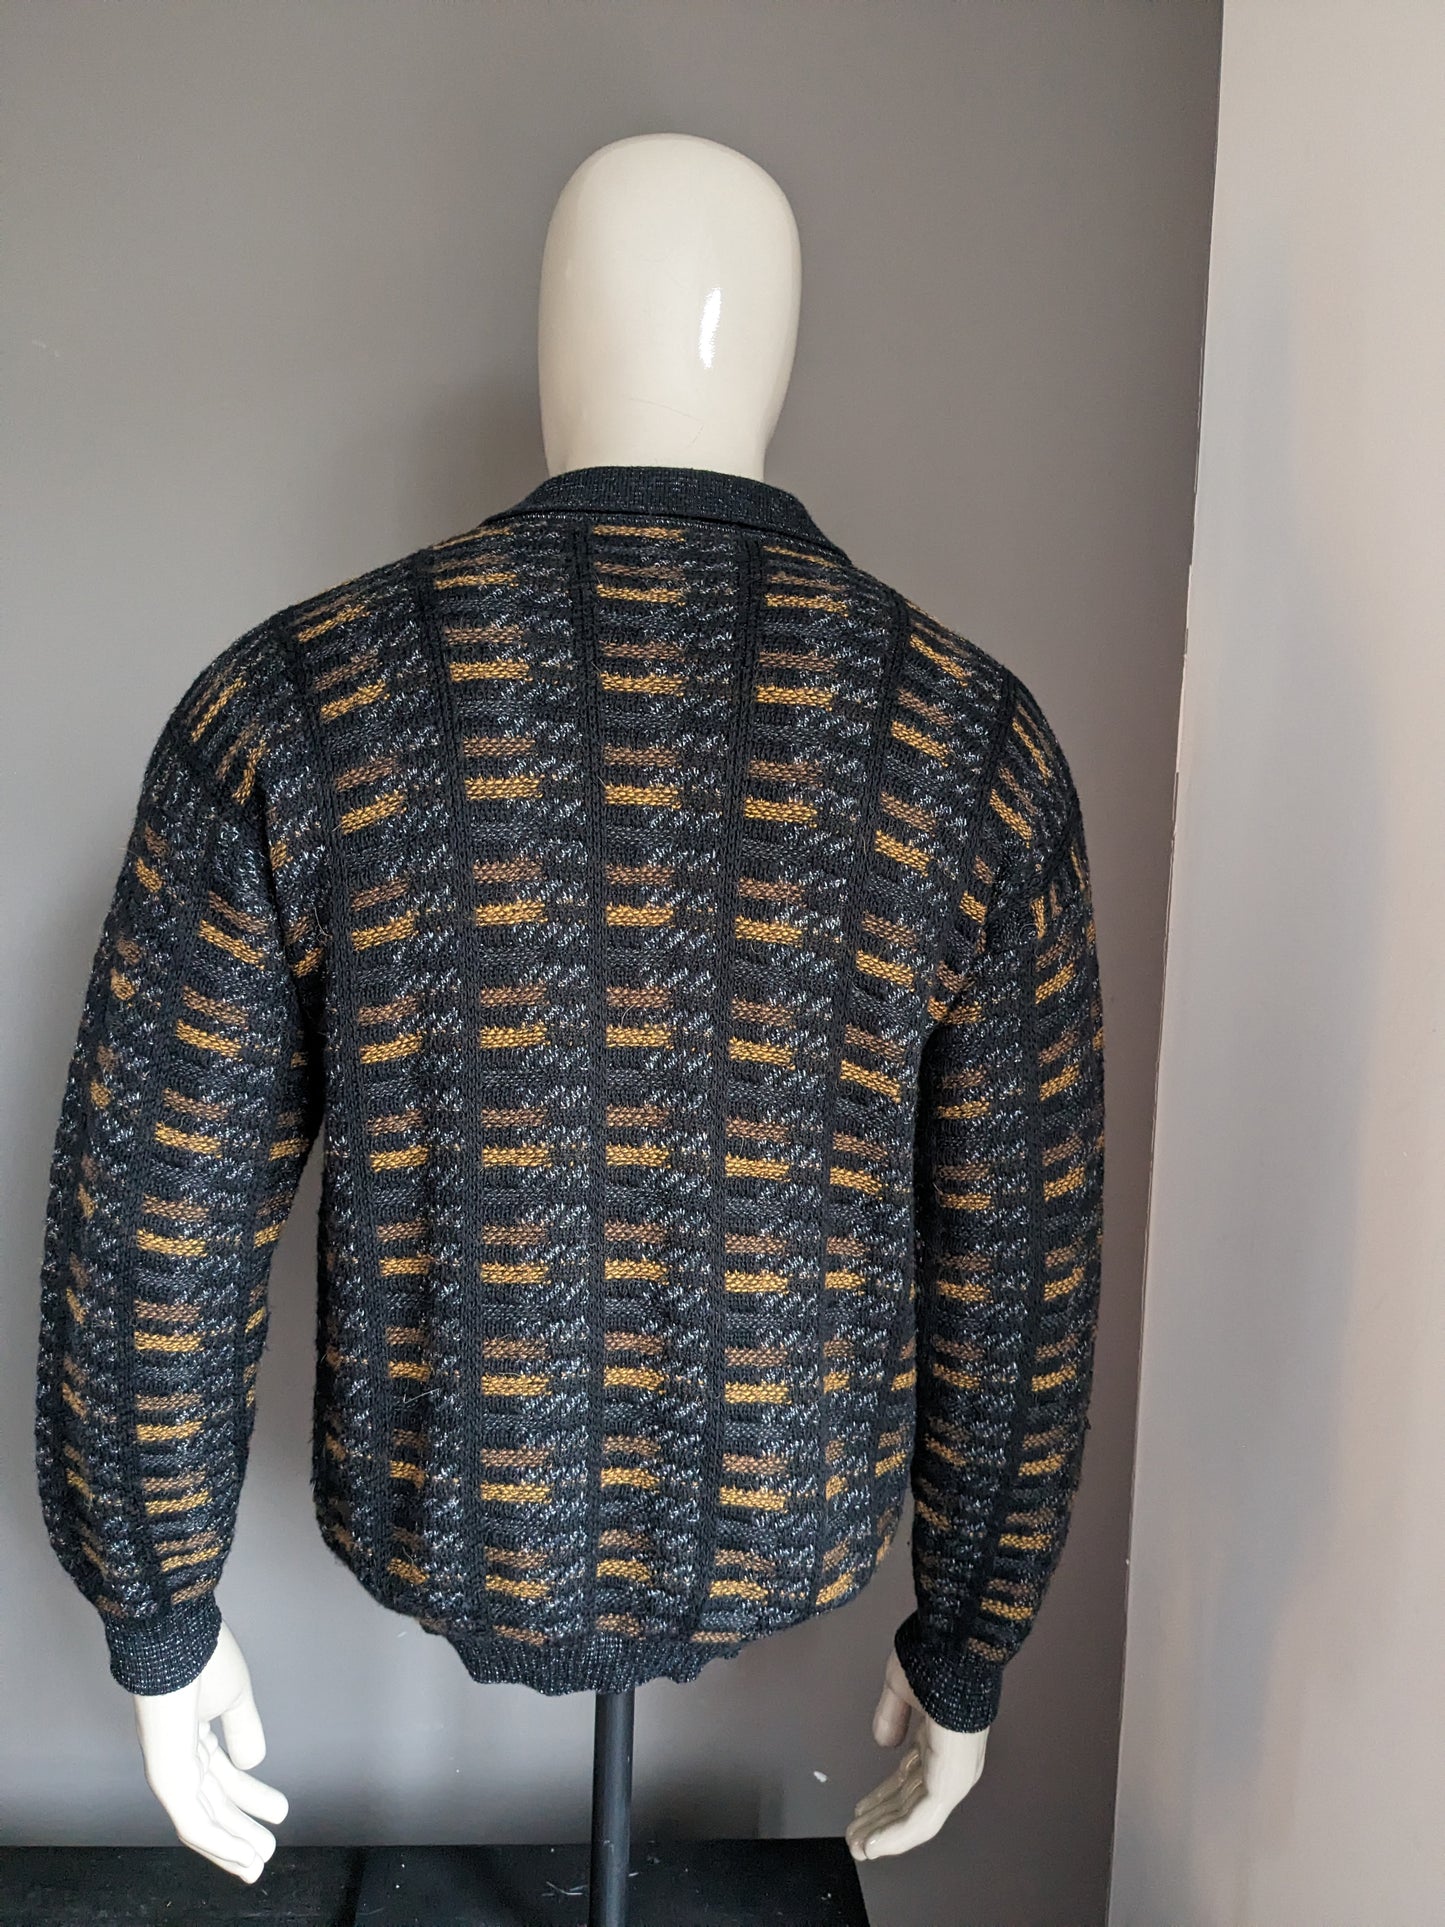 Vintage Monello Wollen polo trui. Zwart Geel Bruin gekleurd. Maat L. 55% Wol.